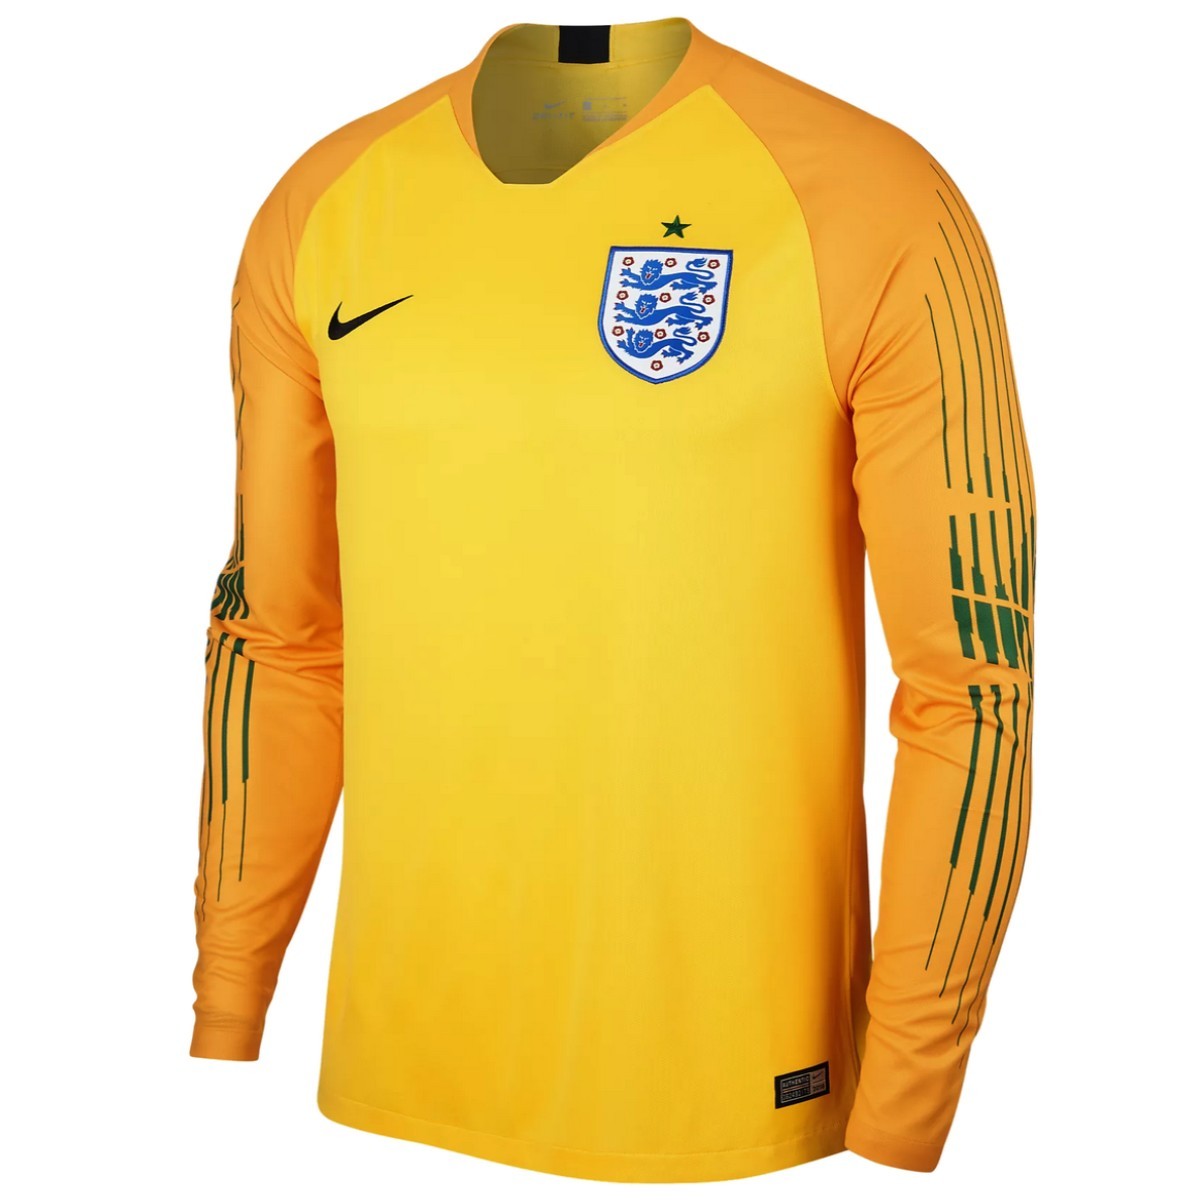 england football kit long sleeve